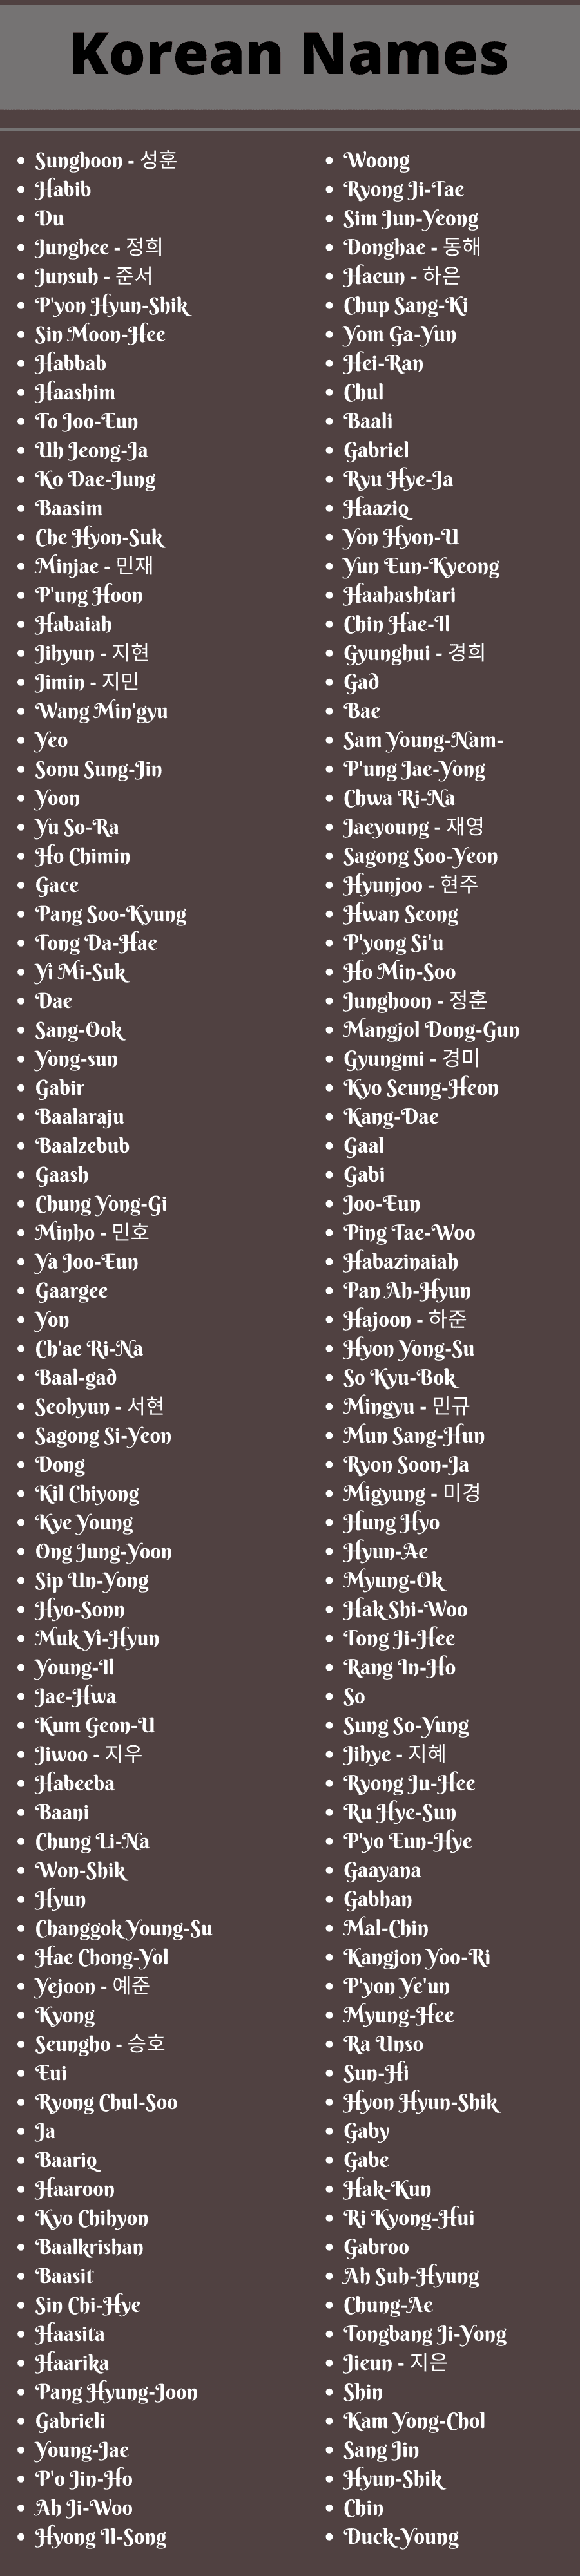 Korean Names